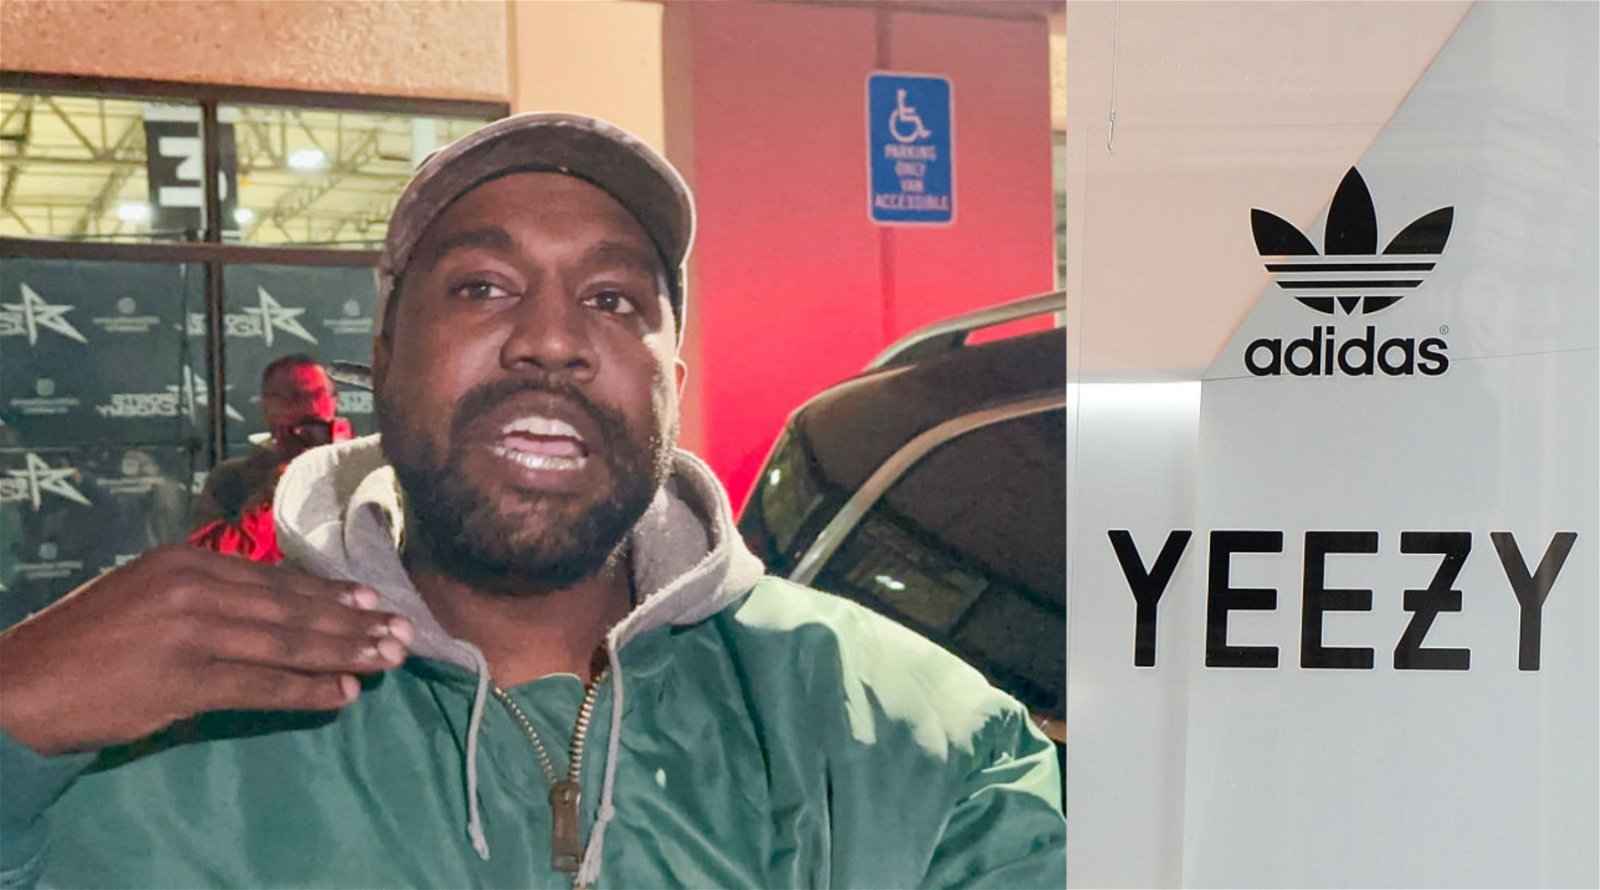 Adidas vreest tot 700 miljoen na fiasco rond Yeezy-label van Kanye 'Ye' Business AM